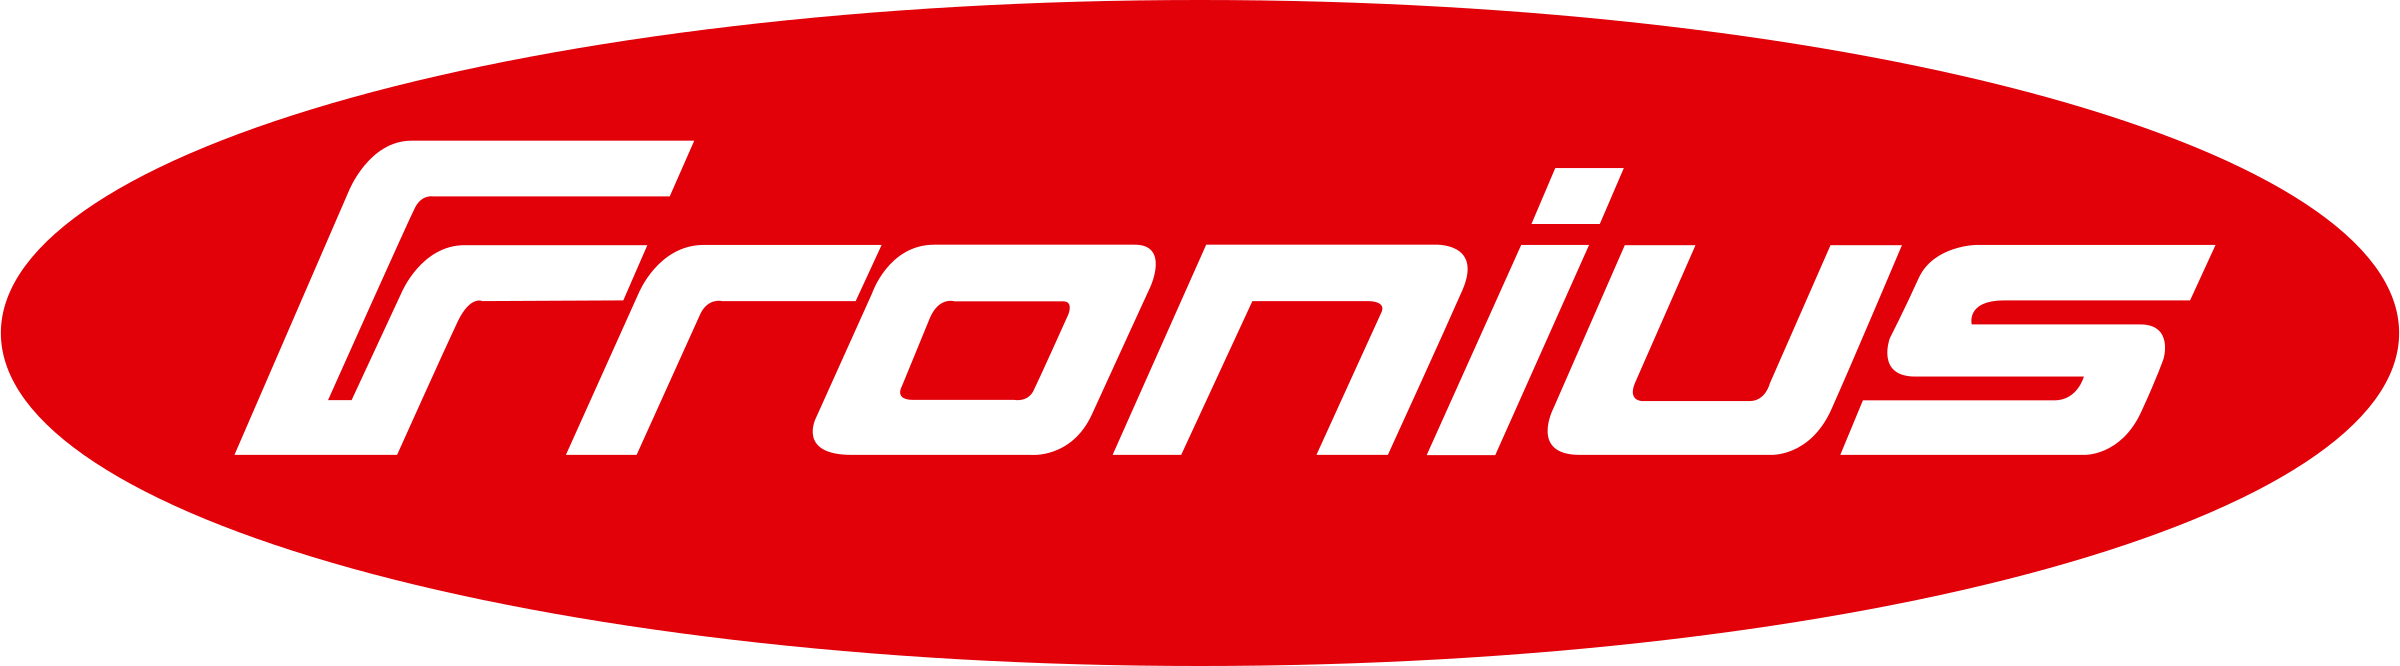 fronius-1-logo-png-transparent